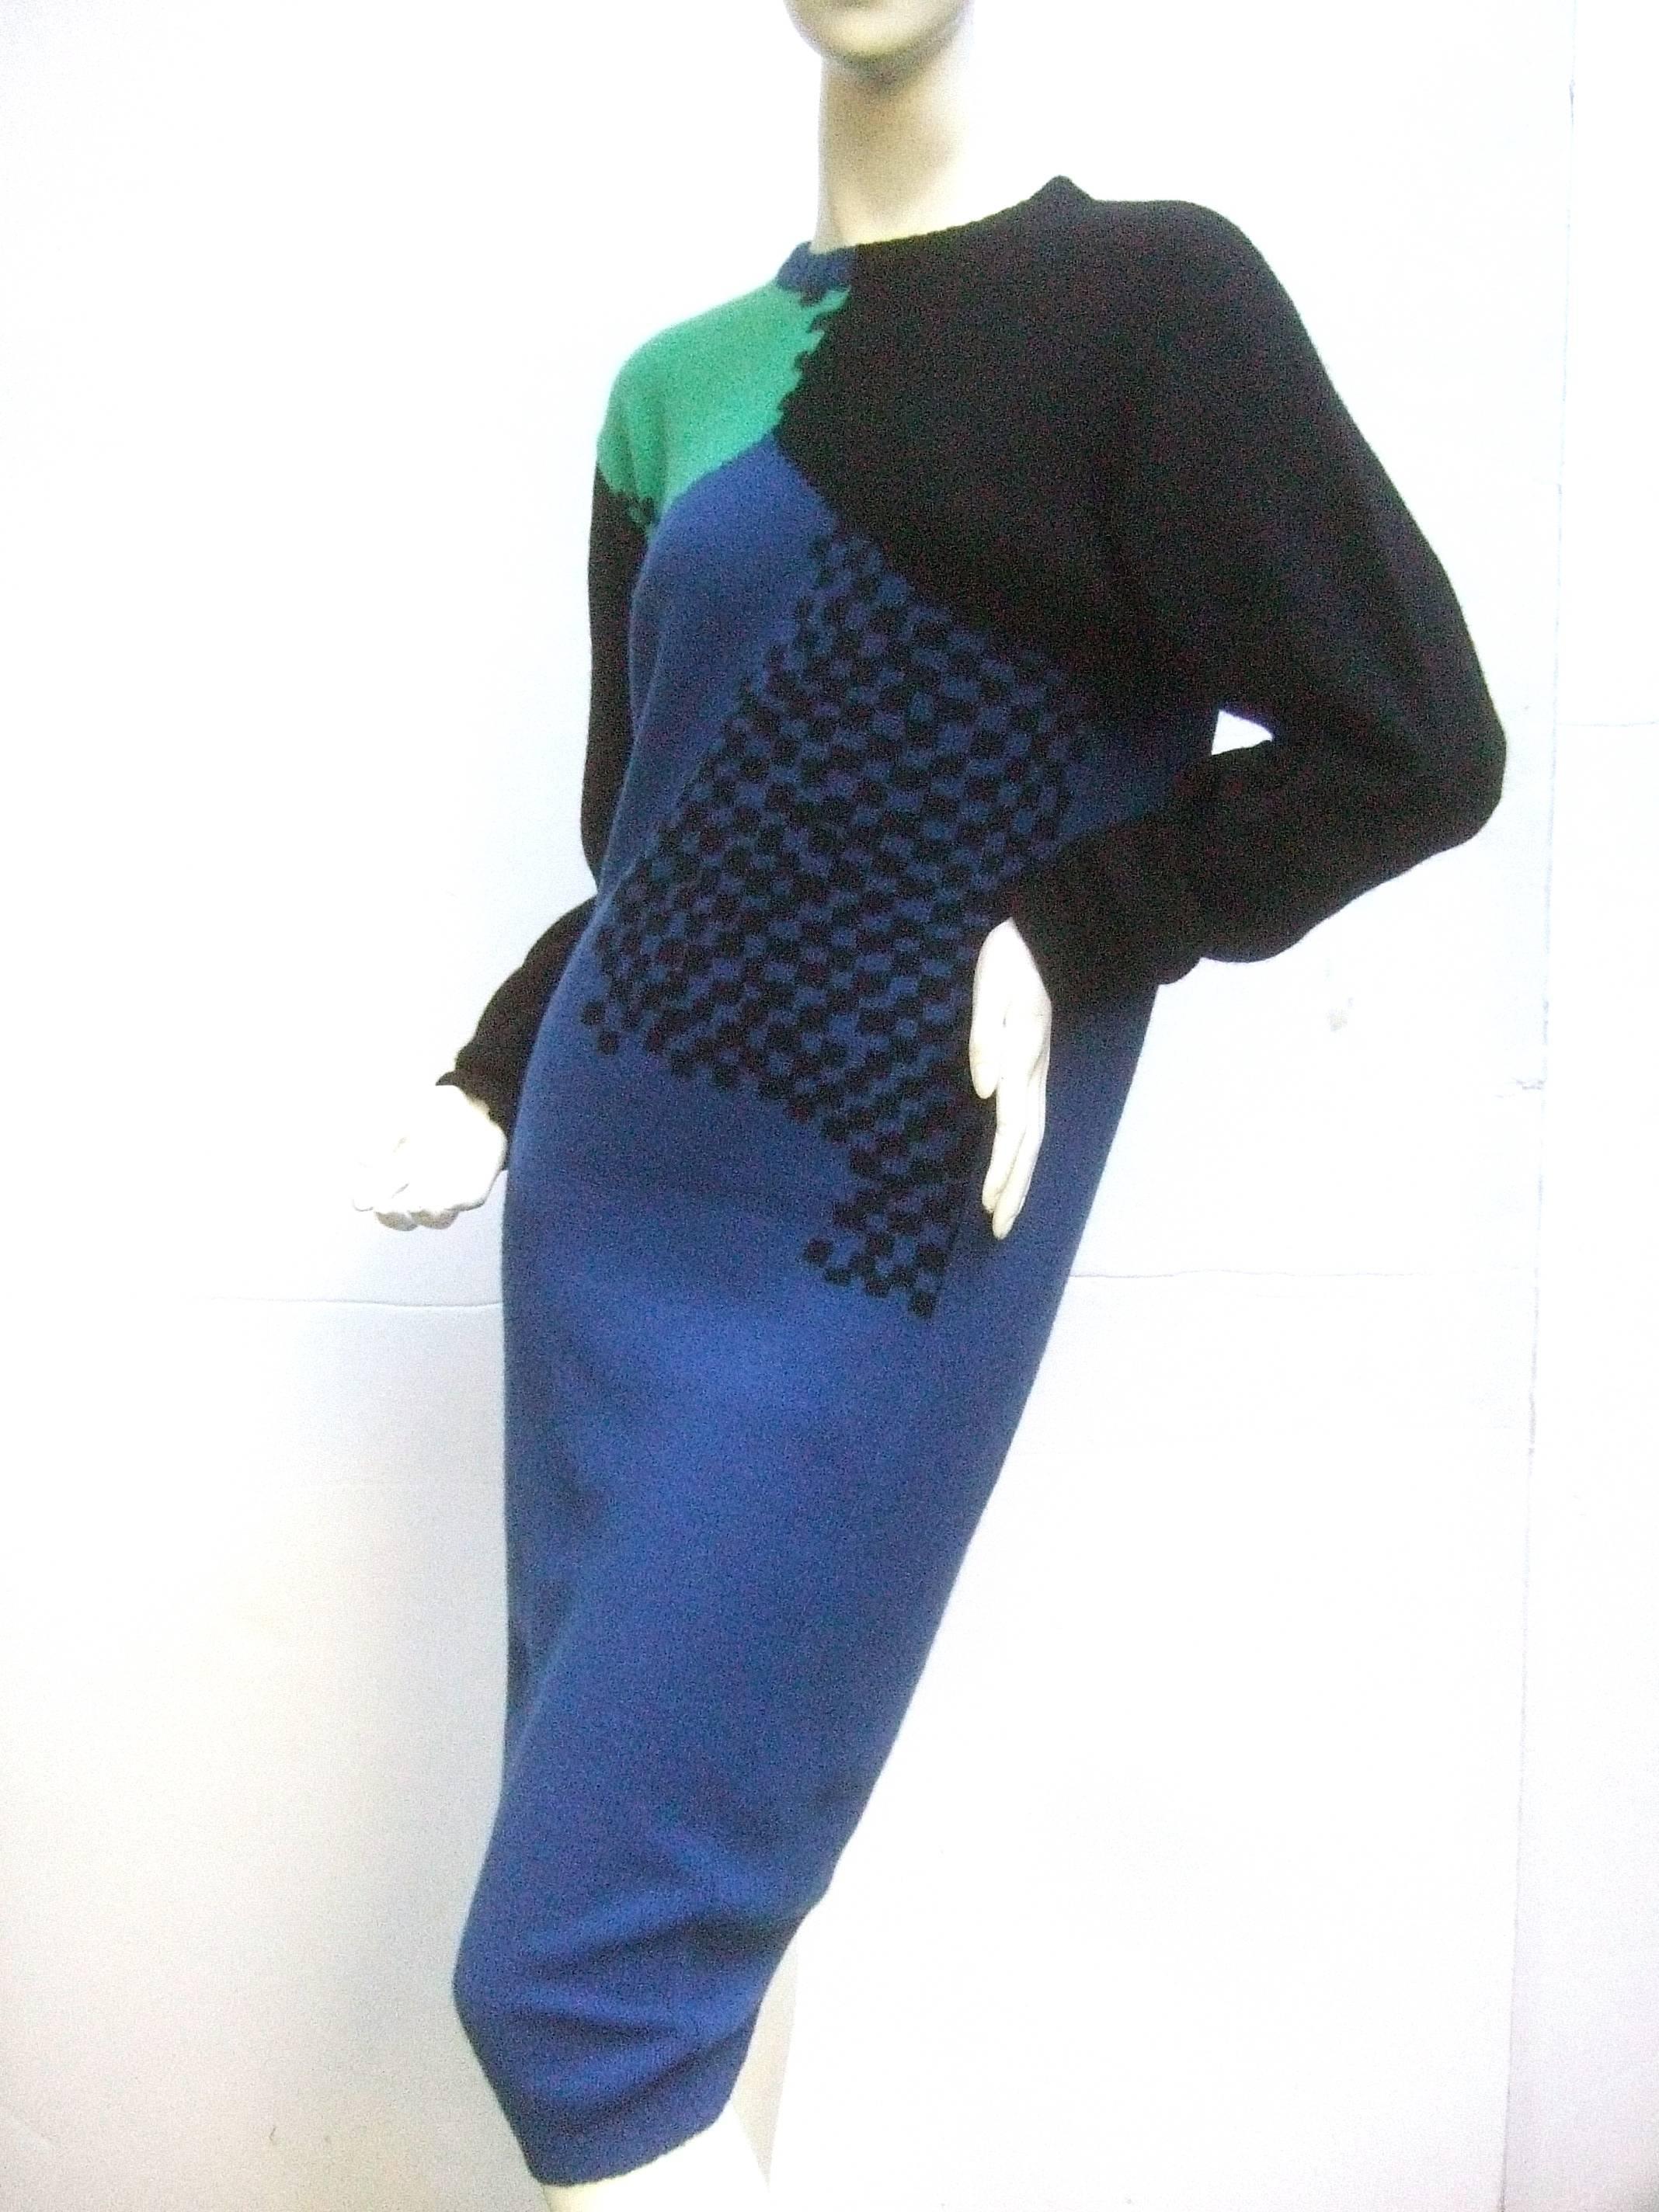 Women's Yves Saint Laurent Italian Mod Wool Knit Sweater Dress circa 1980s